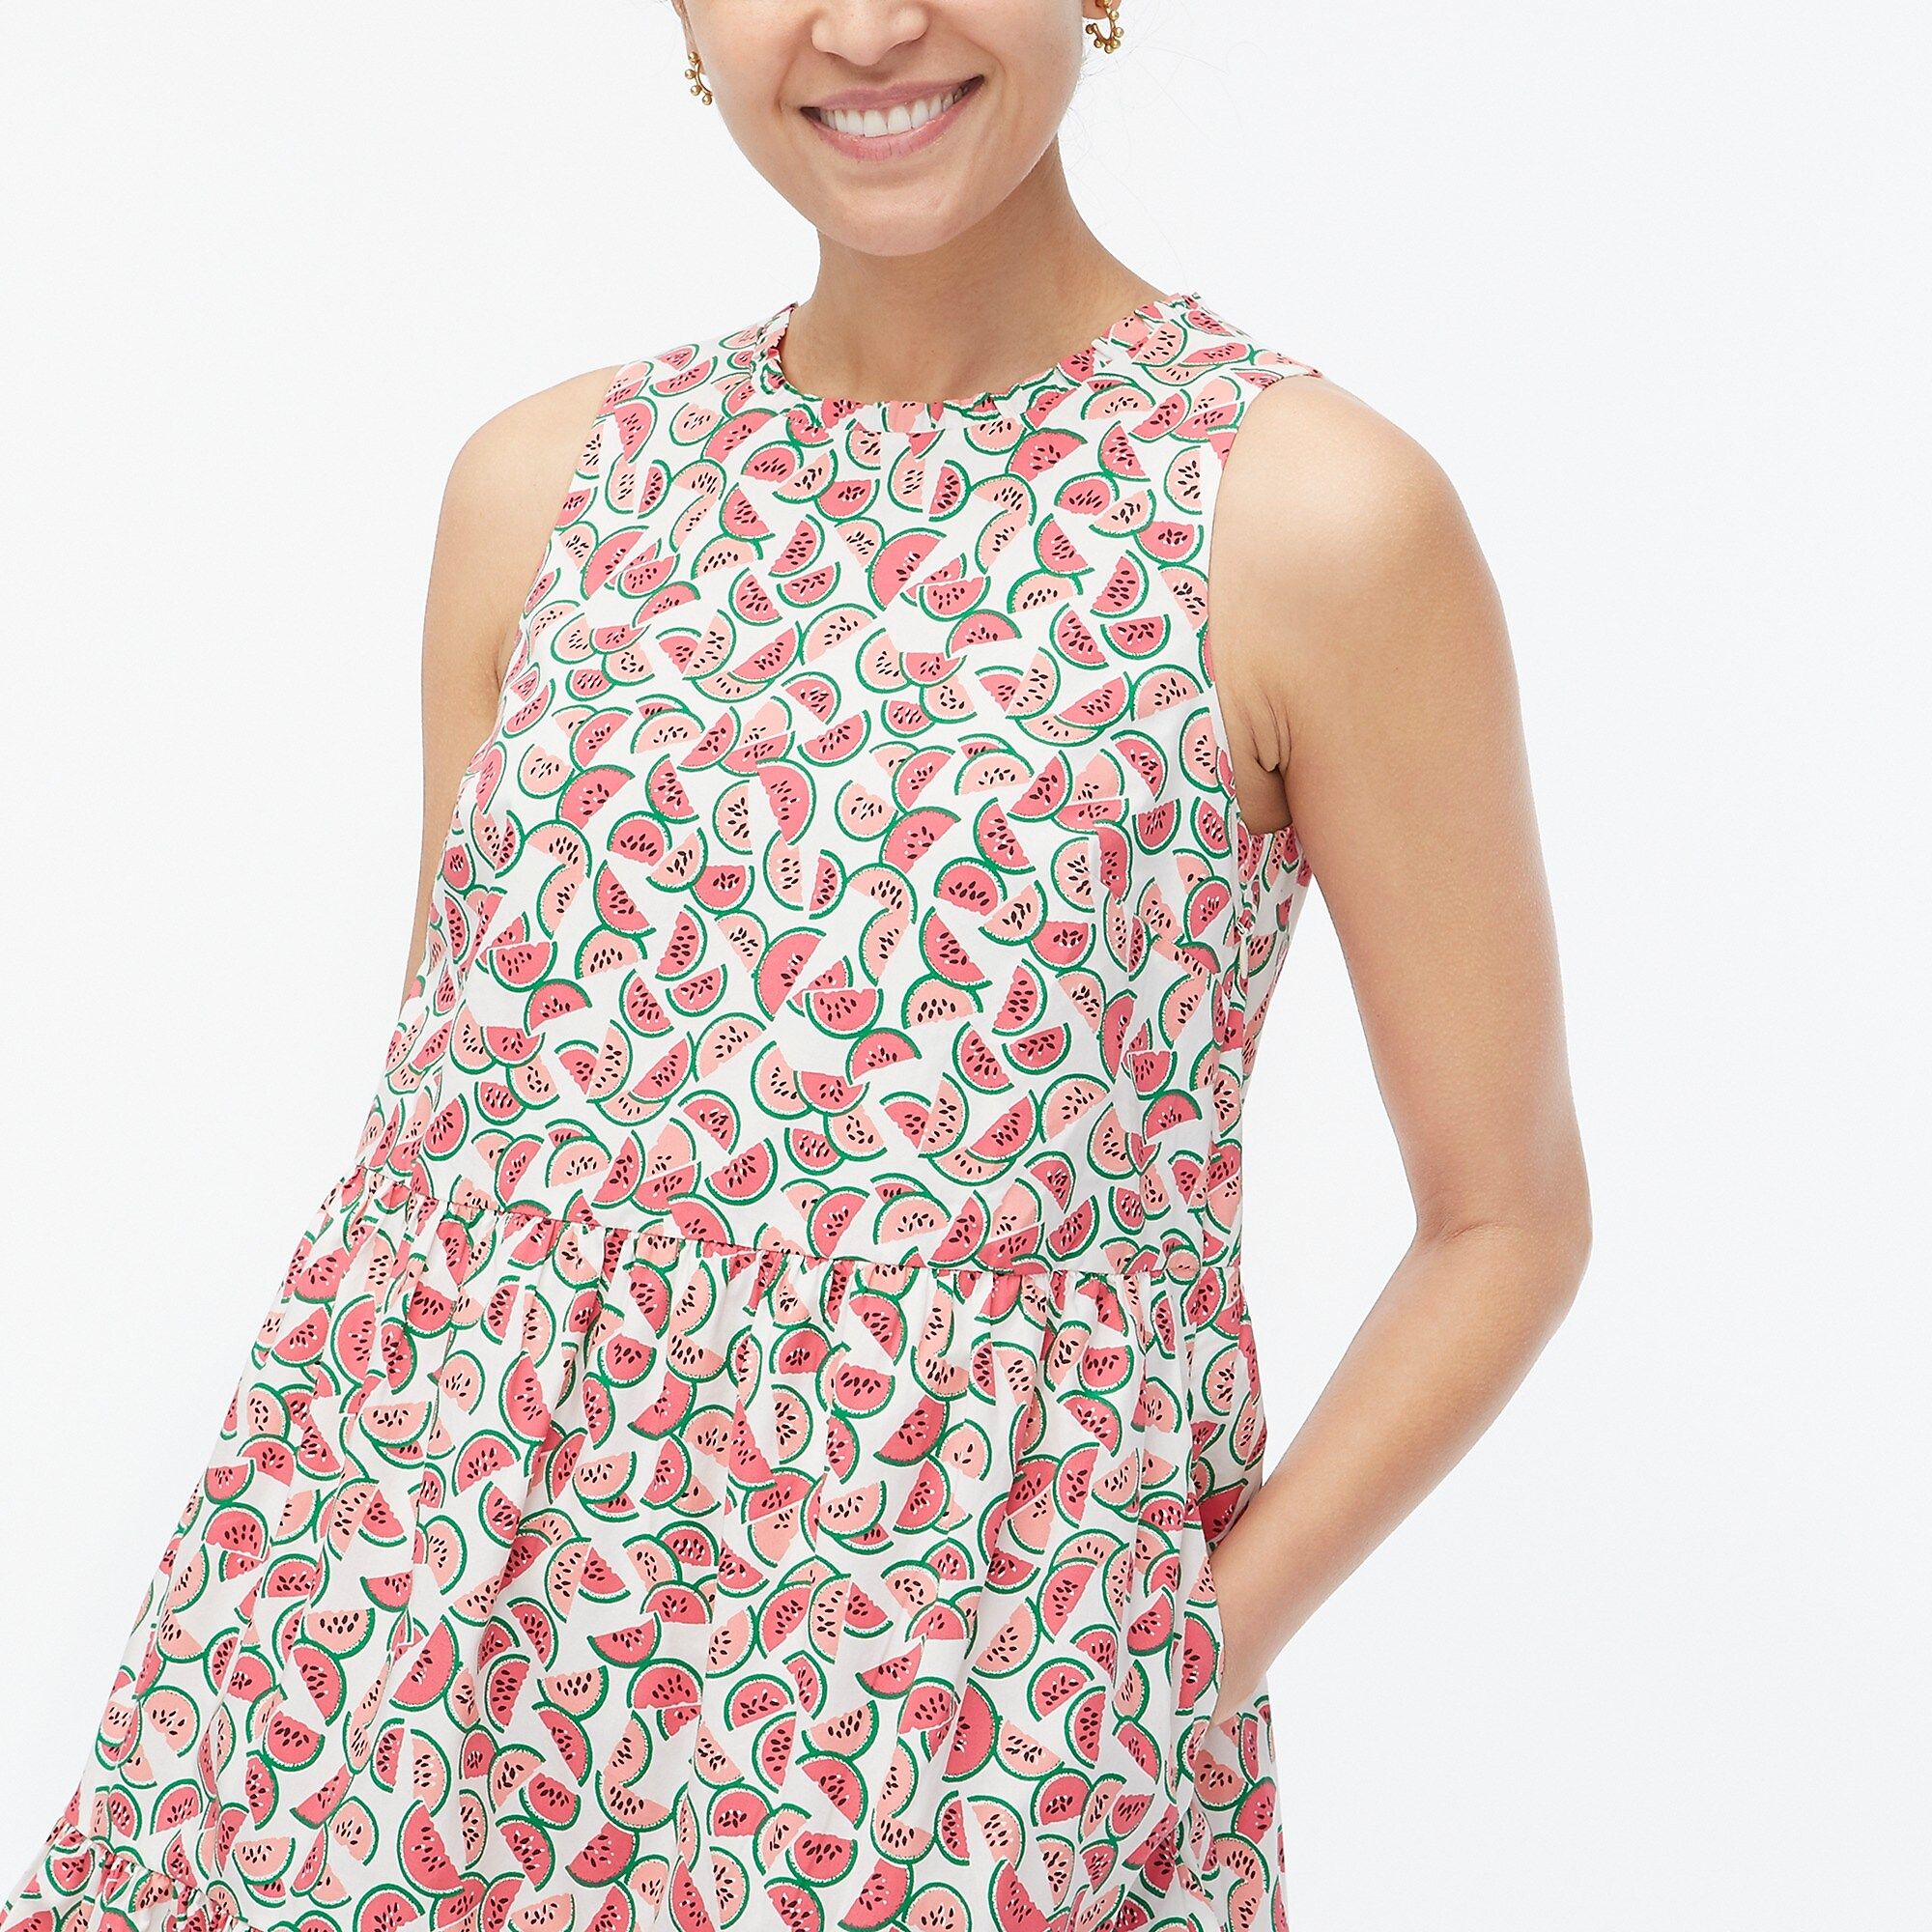 Sleeveless tiered mini dress in cotton poplin | J.Crew Factory